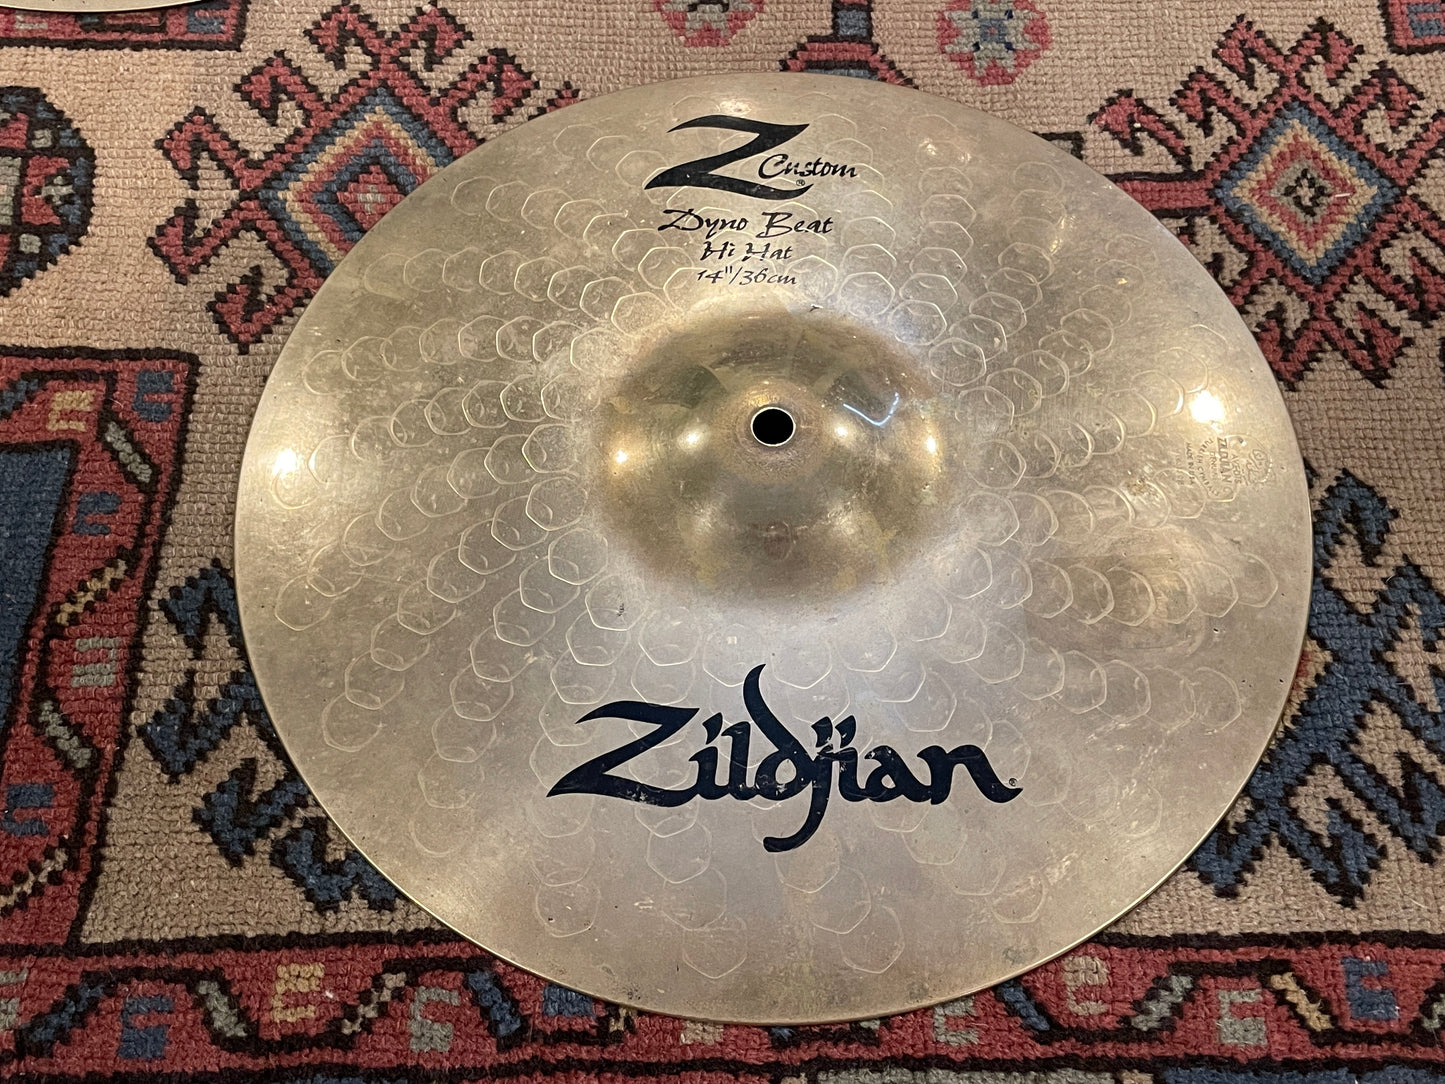 14" Zildjian Z Custom Dyno Beat Hi-Hat Cymbal Pair 1604g/1660g Z40133